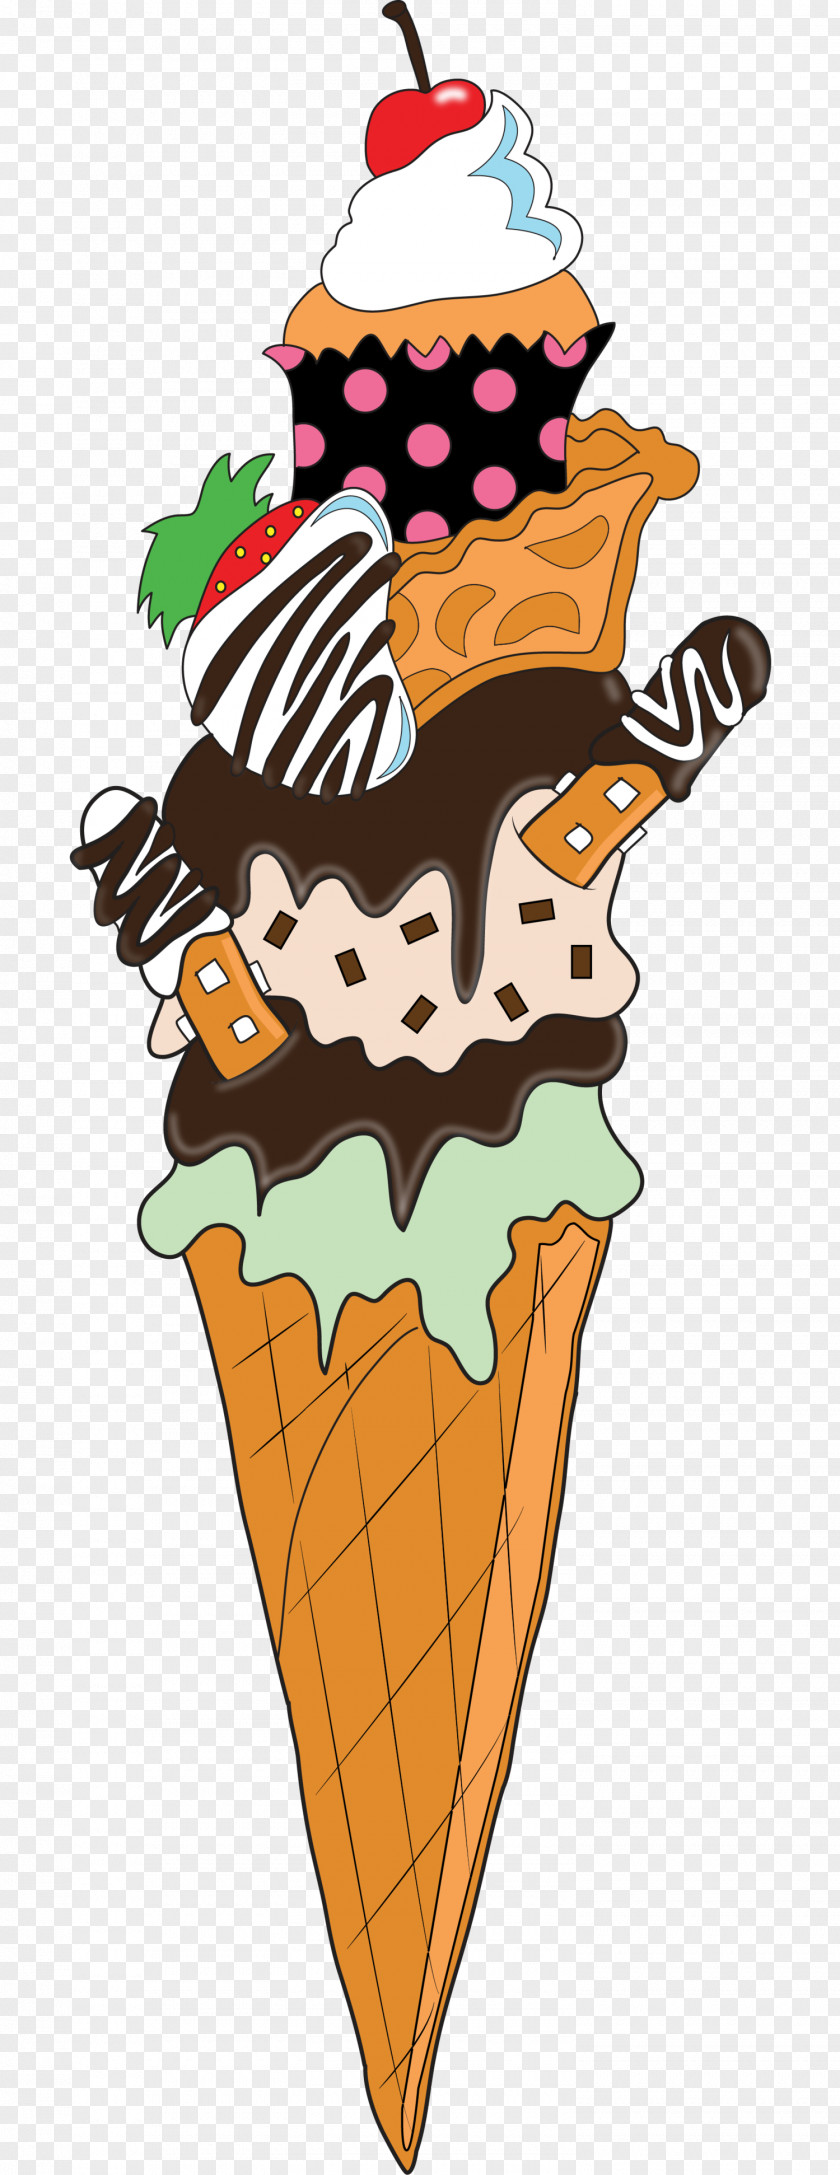 Shawarma Graphic Sundae Clip Art Gift Ice Cream Cones Image PNG